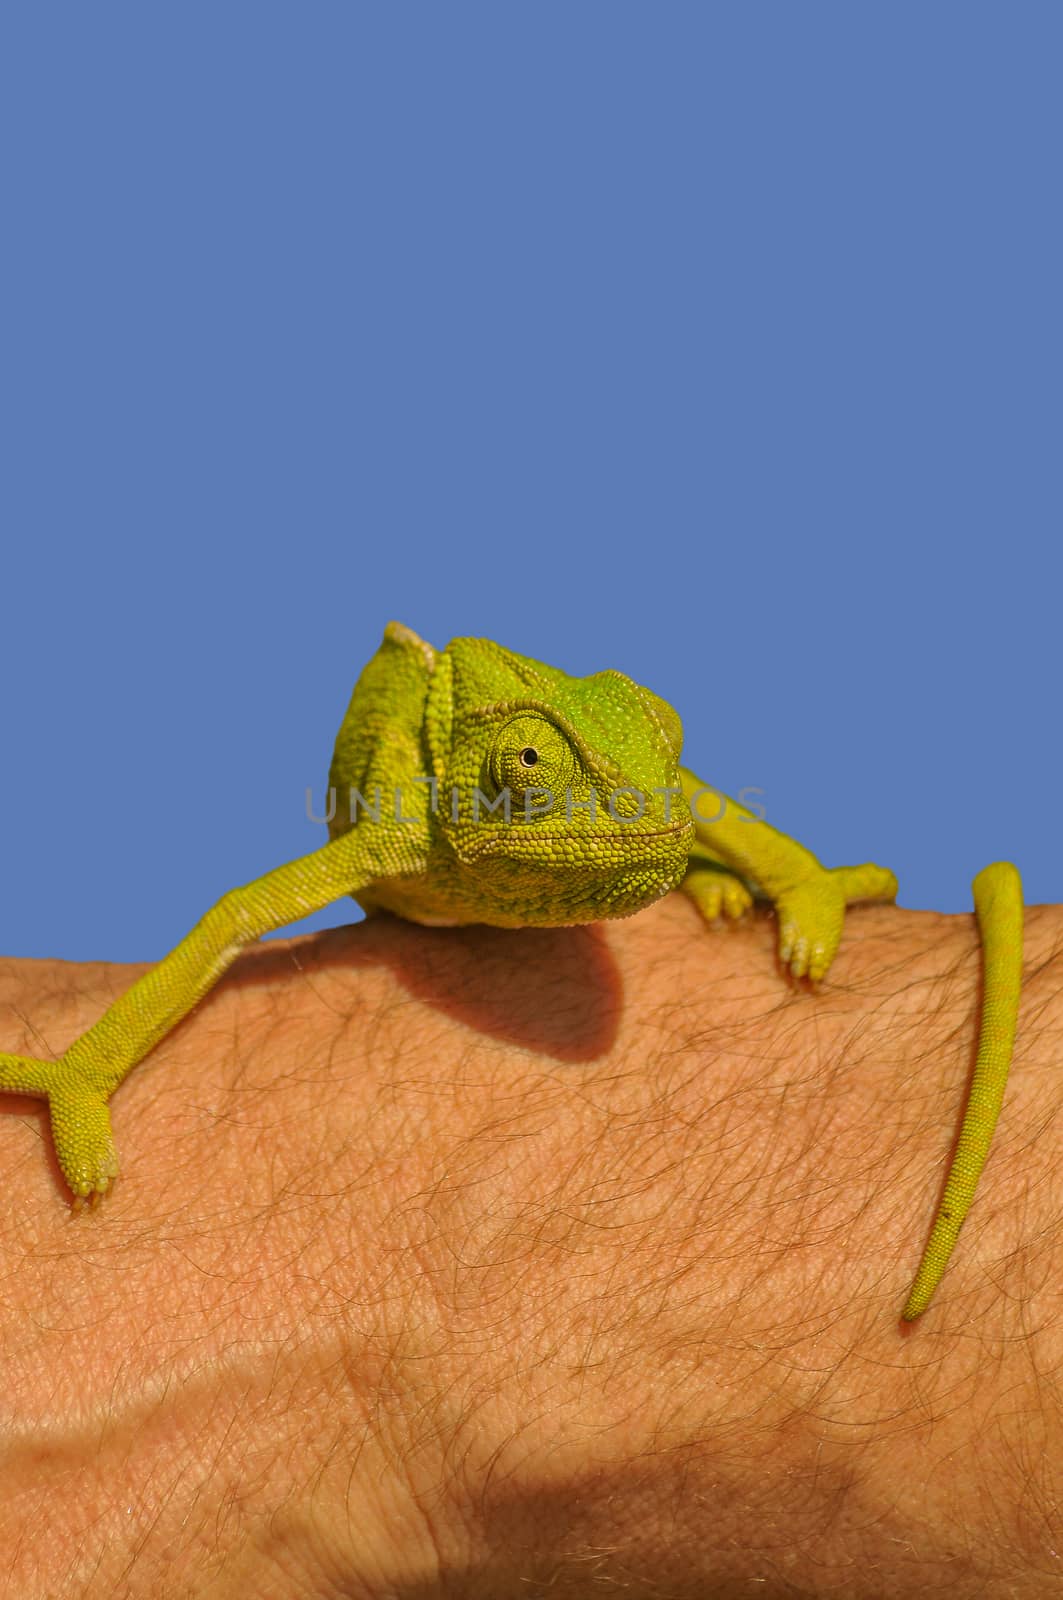 Chameleon on the arm by danielbarquero